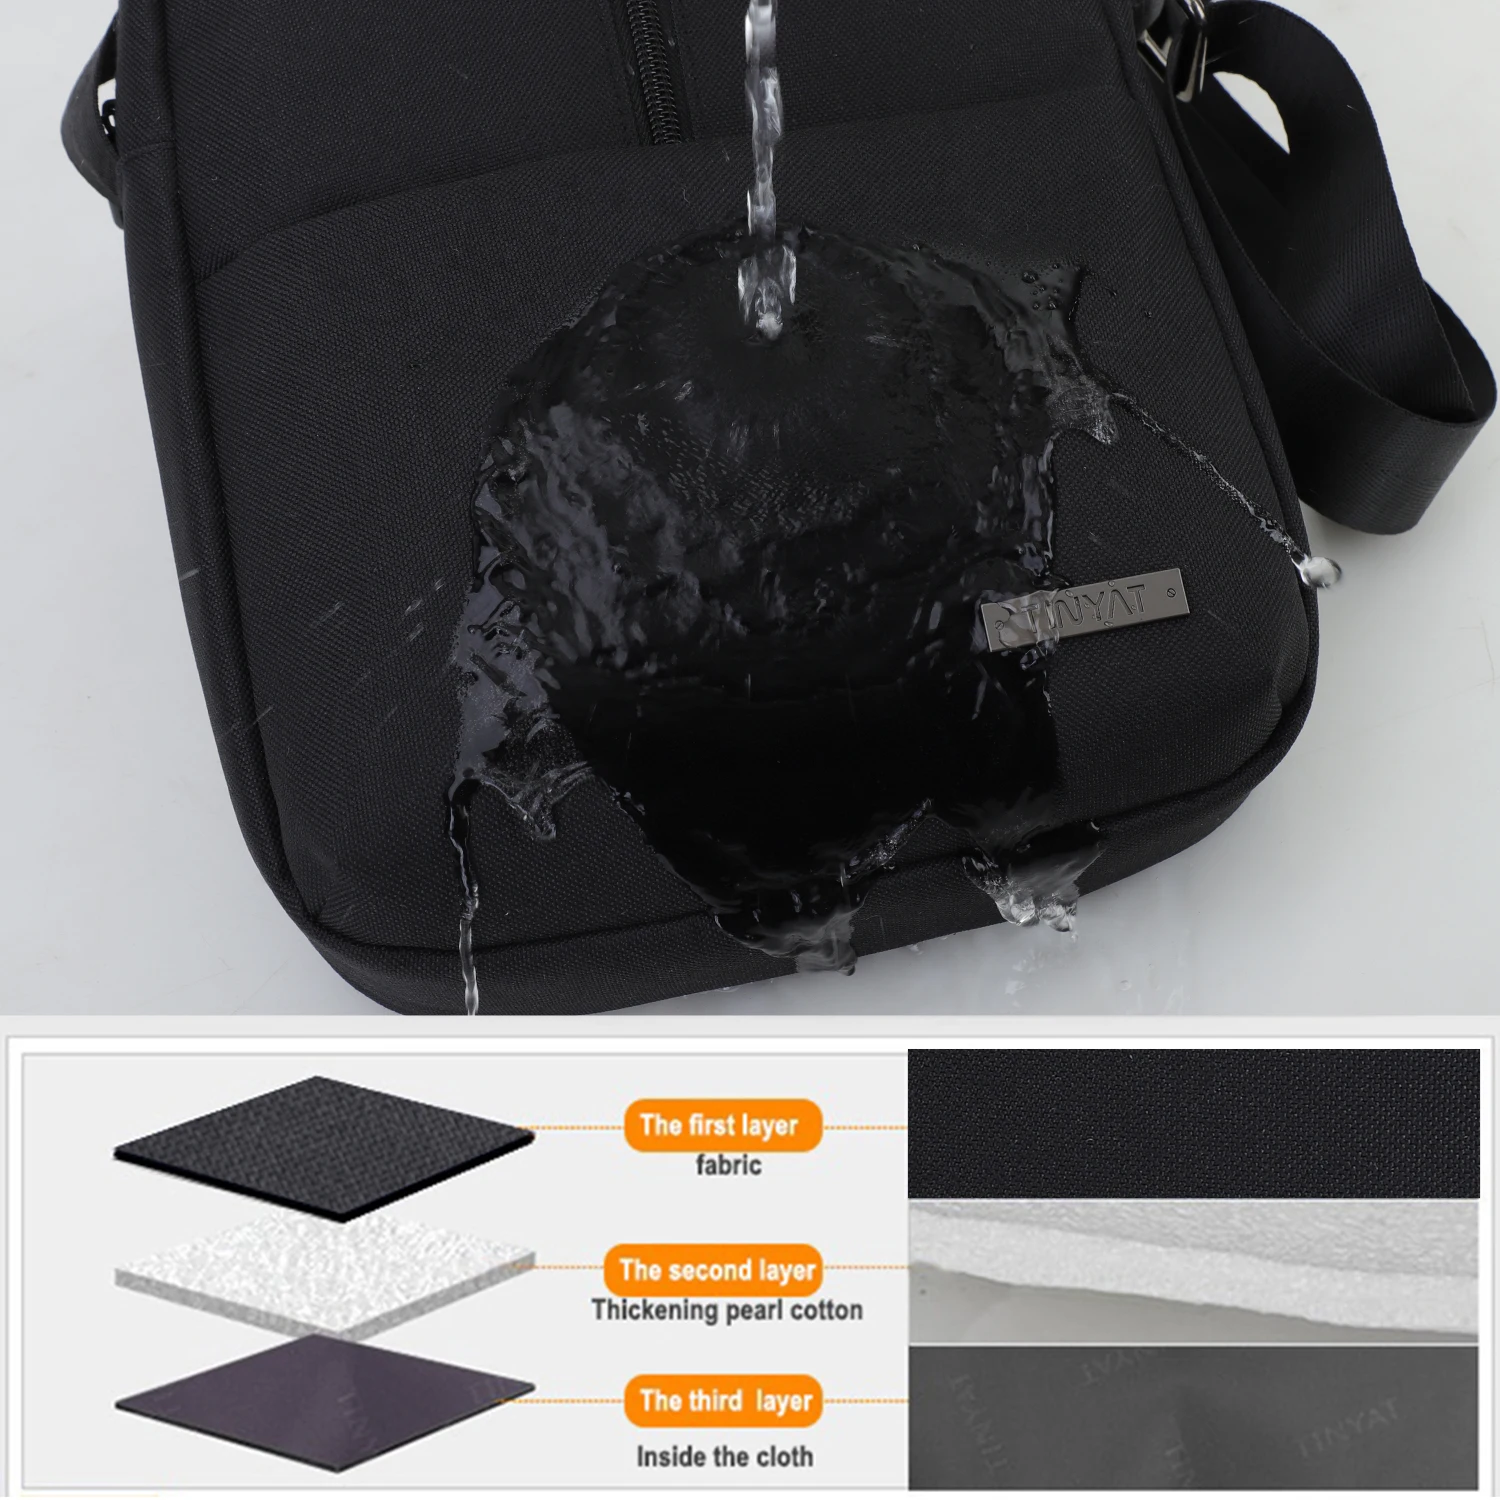 TINYTA vrečko za moške svetlobo črno platno messenger bag torba za 9.7 'pad 9 žep nepremočljiva športna torba T5002